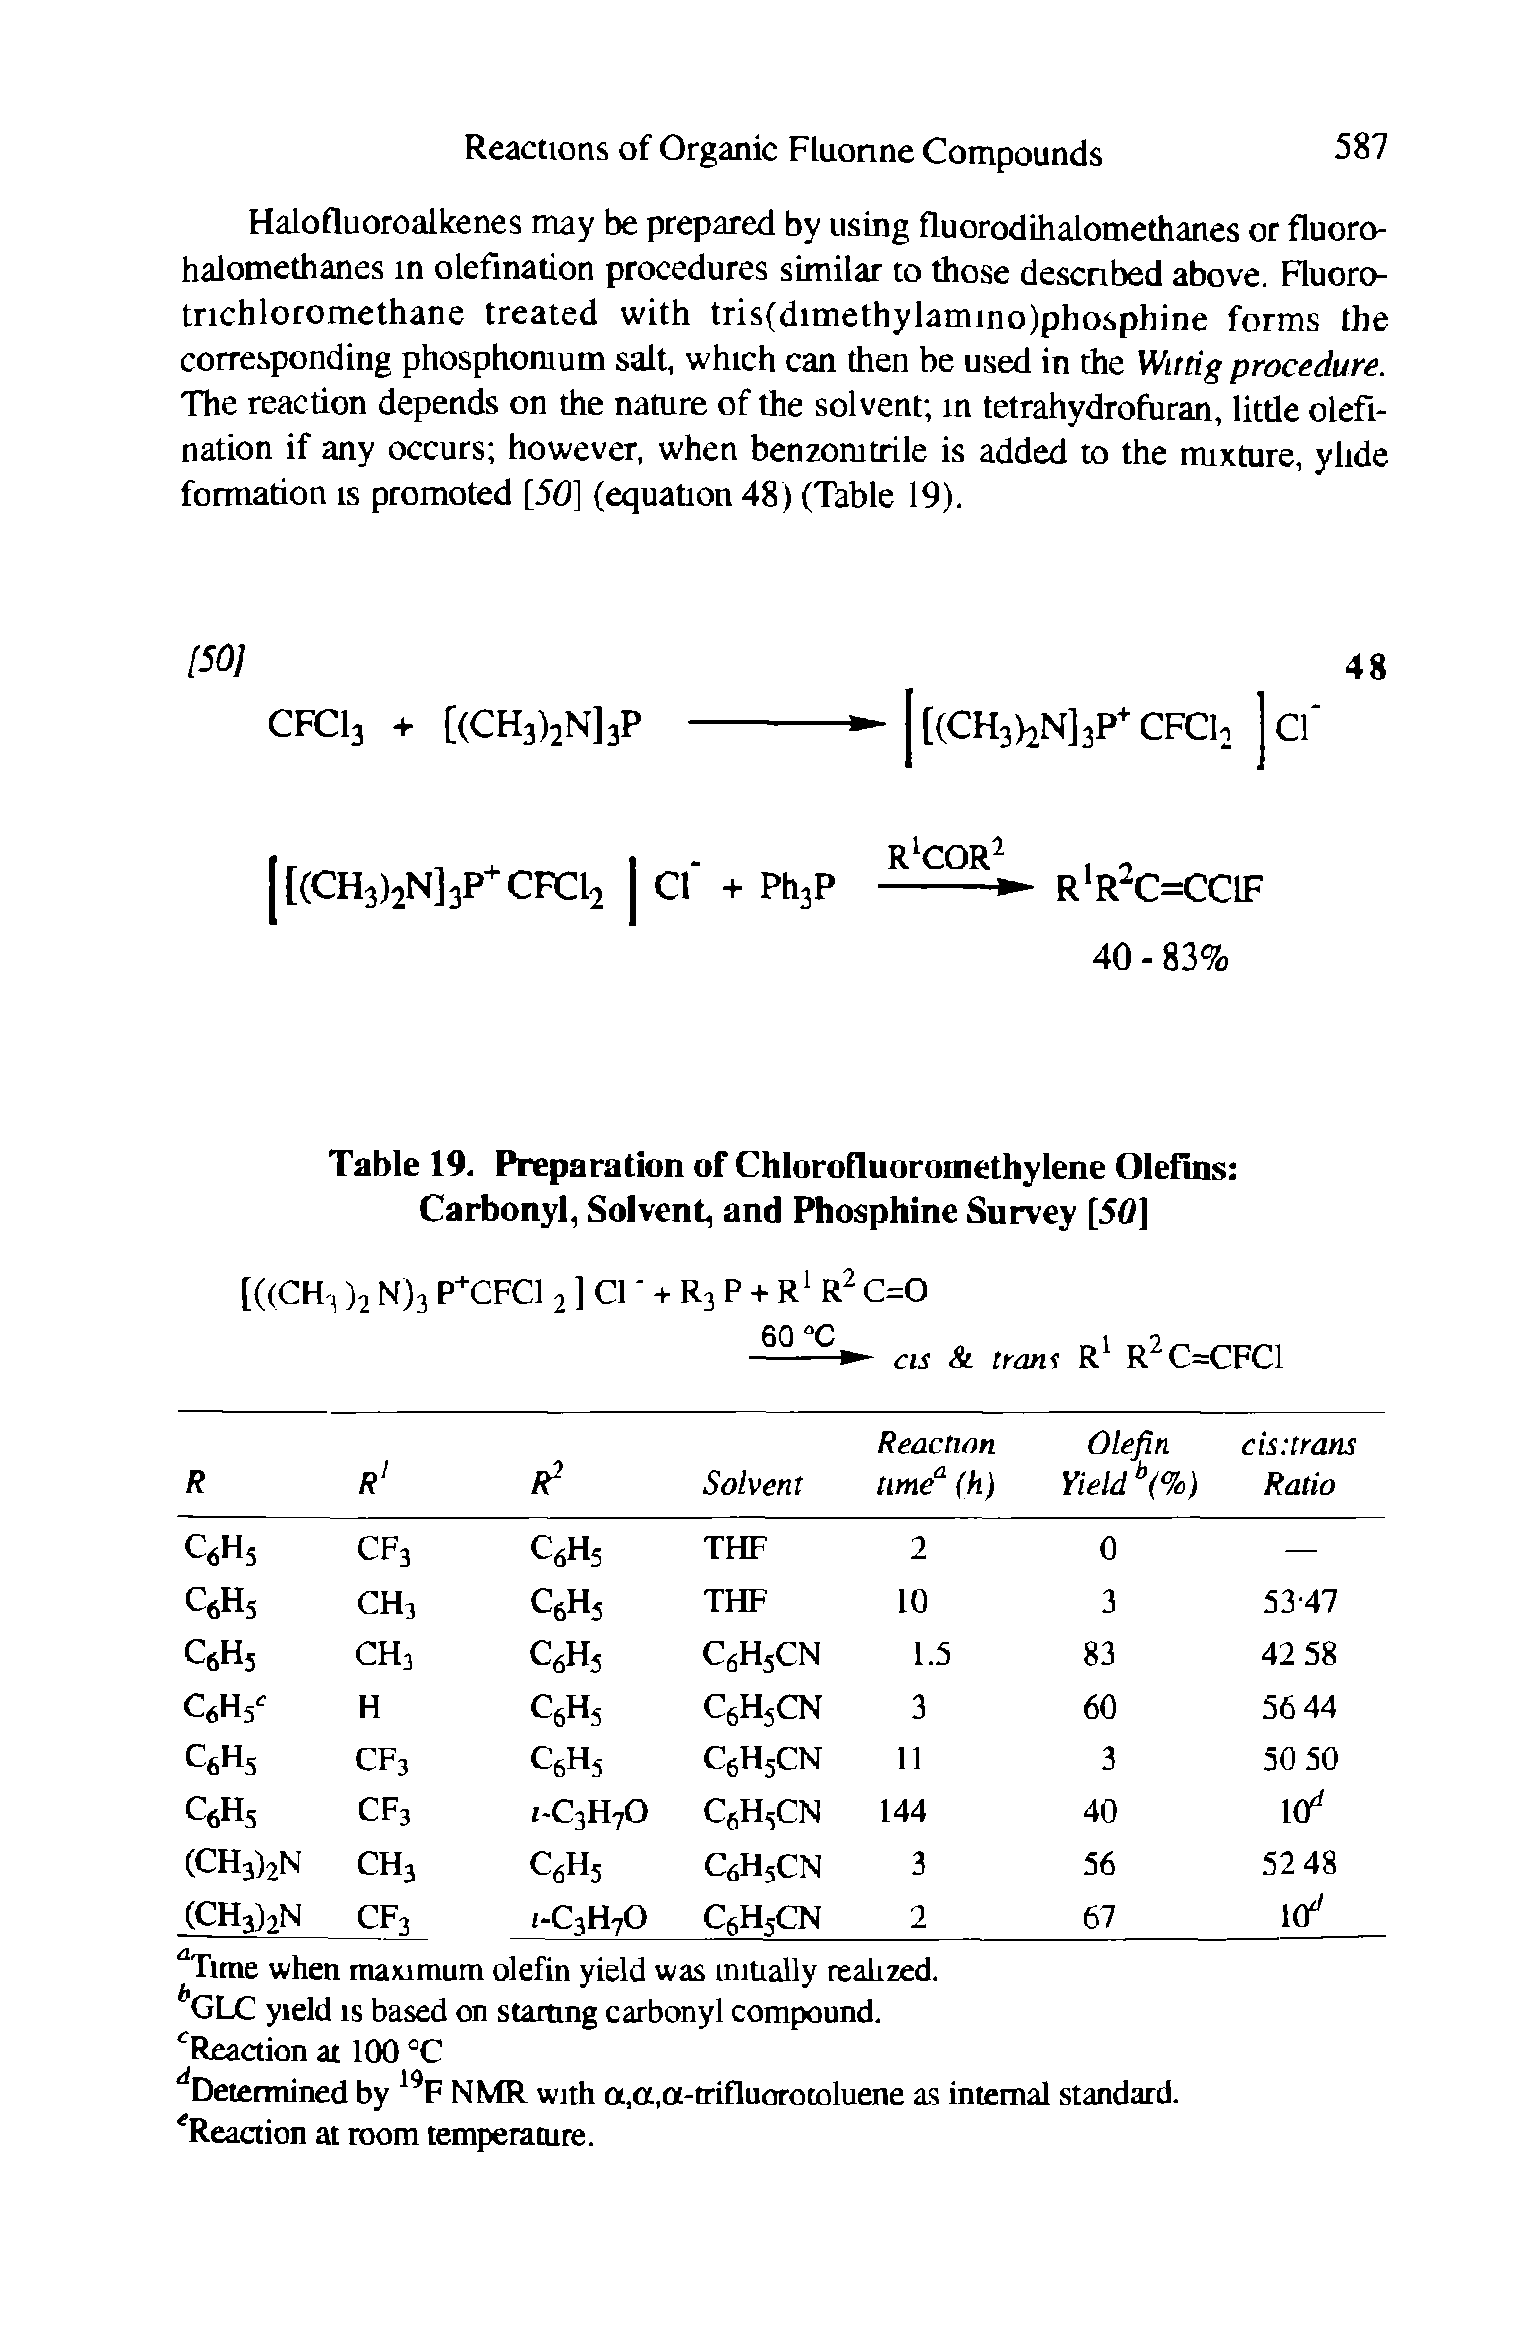 Table 19. Preparation of Chlorofluoromethylene Olefins Carbonyl, Solvent, and Phosphine Survey [5tJ]...